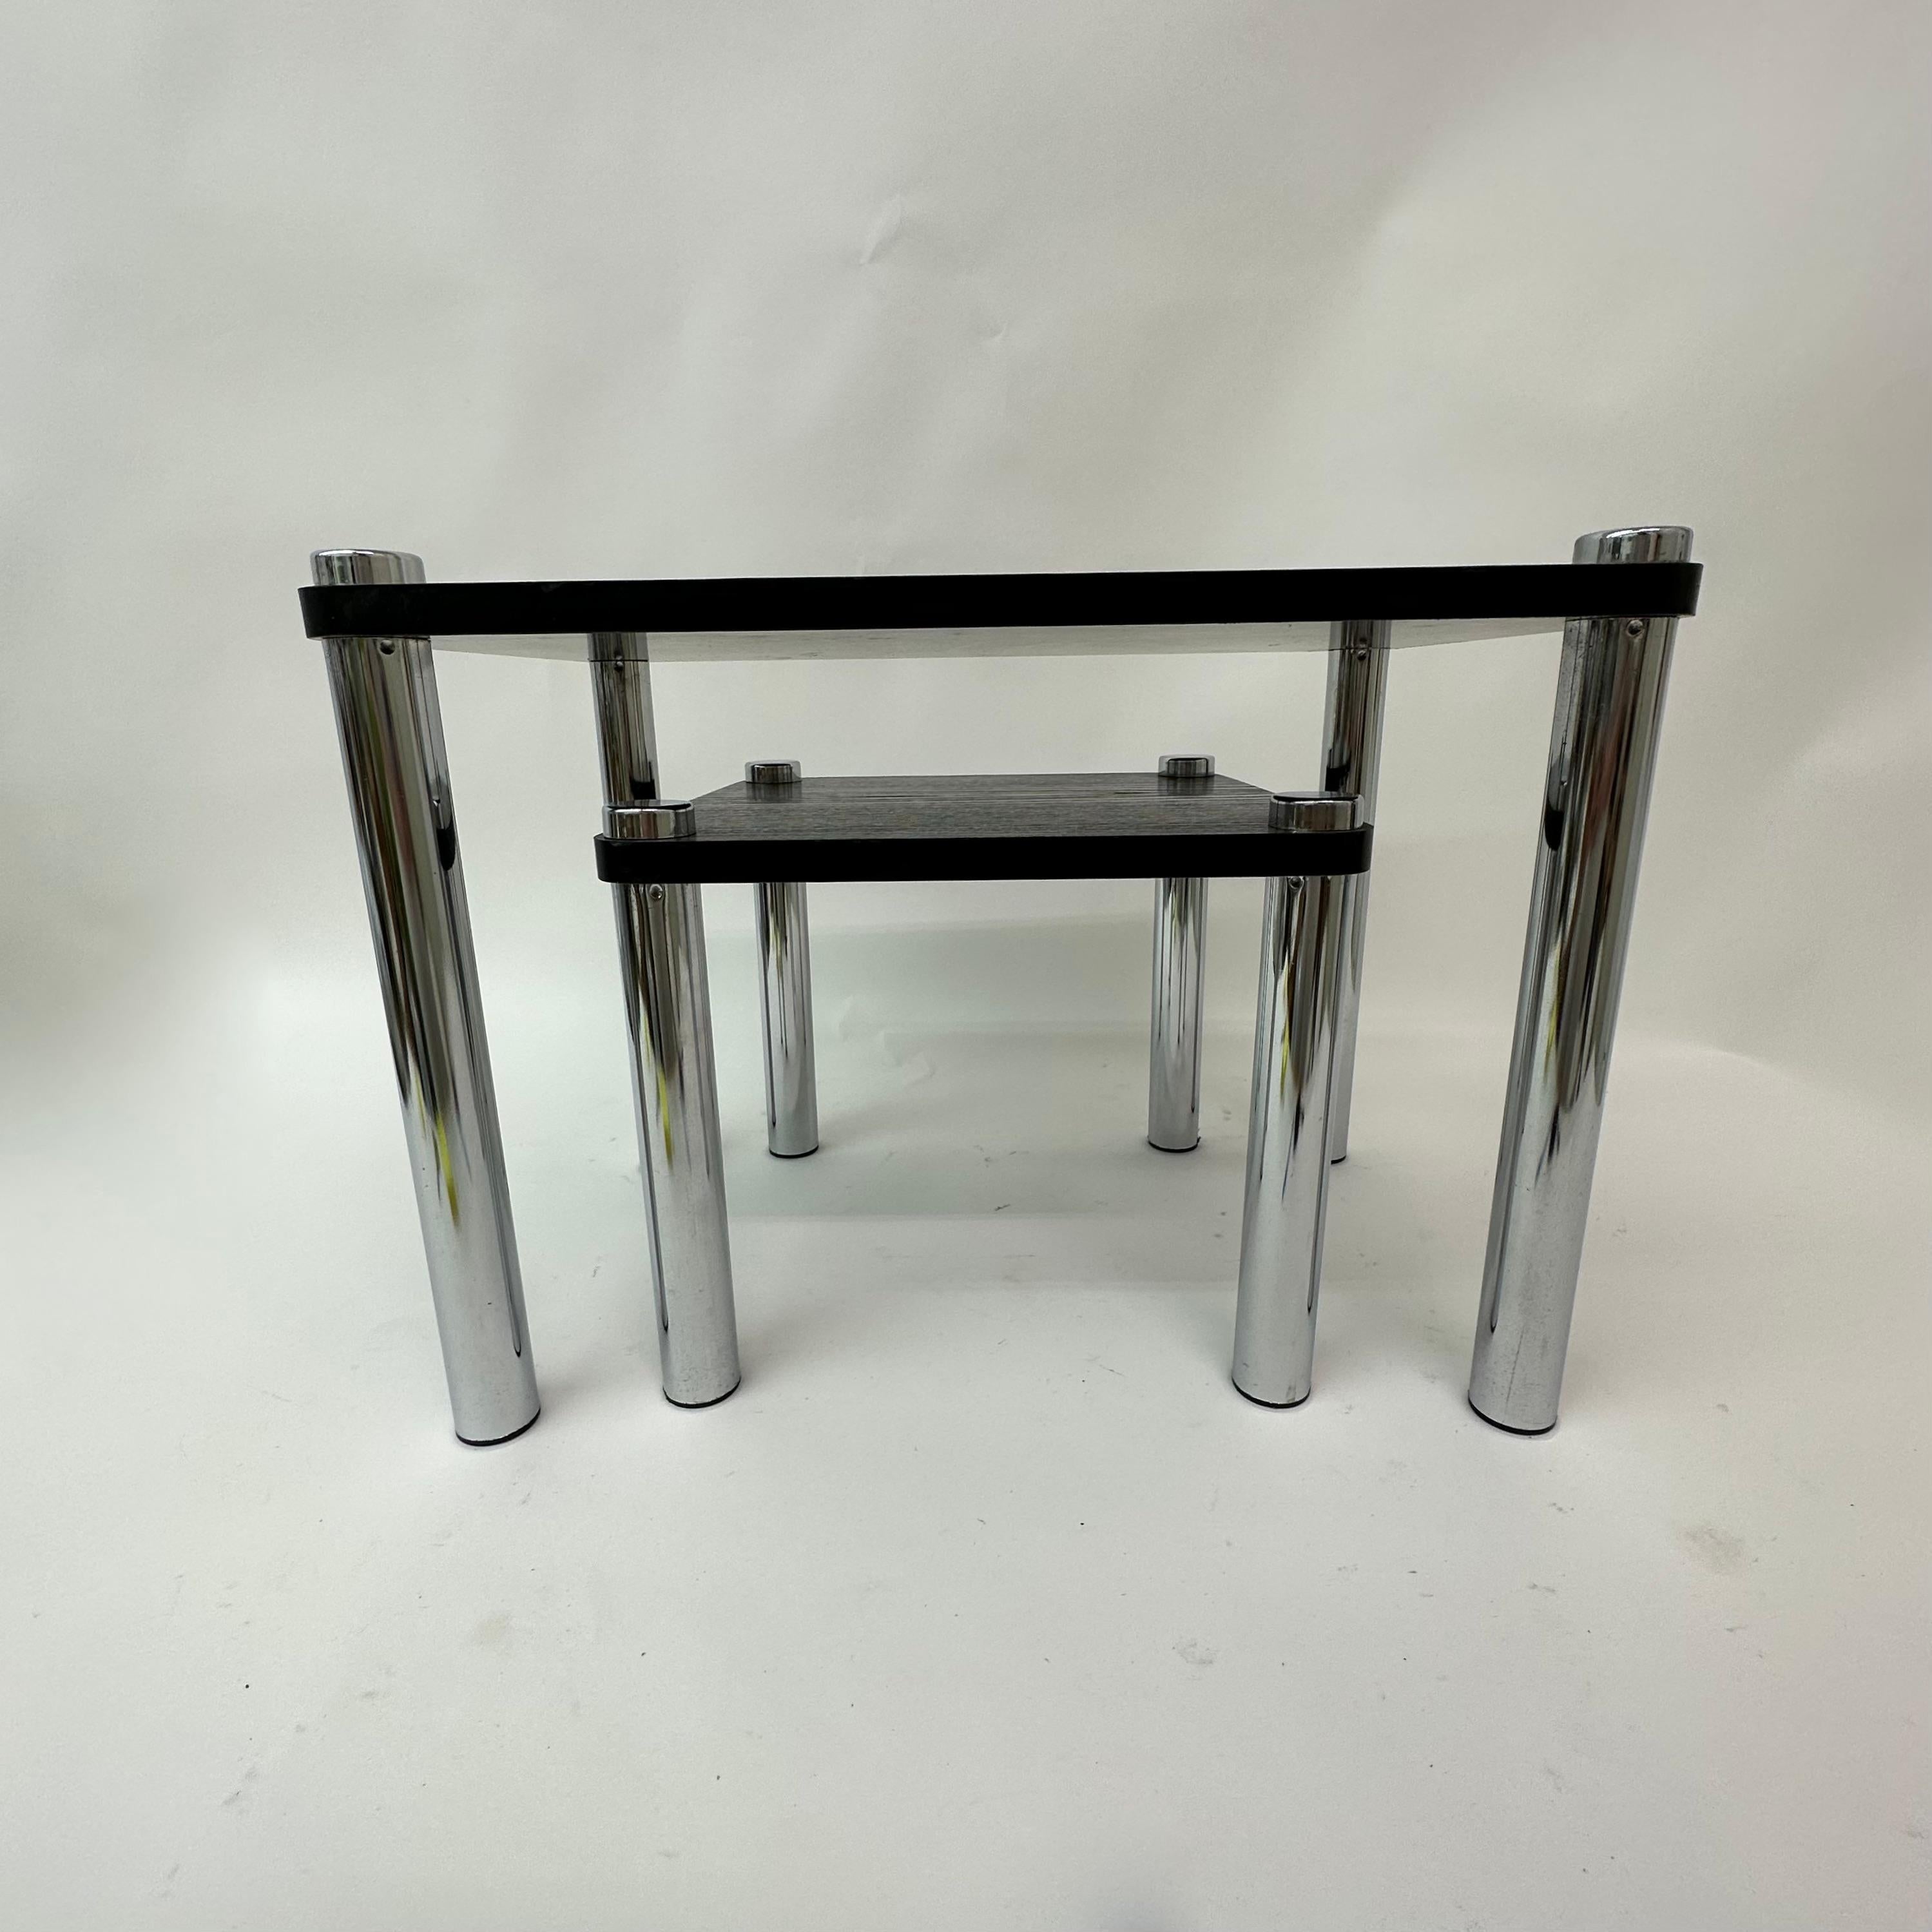 Set of 2 nesting tables , 1970’s
Dimensions: 54 cm W, 34cm D, 40 cm H and 34 cm W , 34cm D, 30 cm H
Period: 1970’s
Material: Wood veneer , metal
Condition: Good